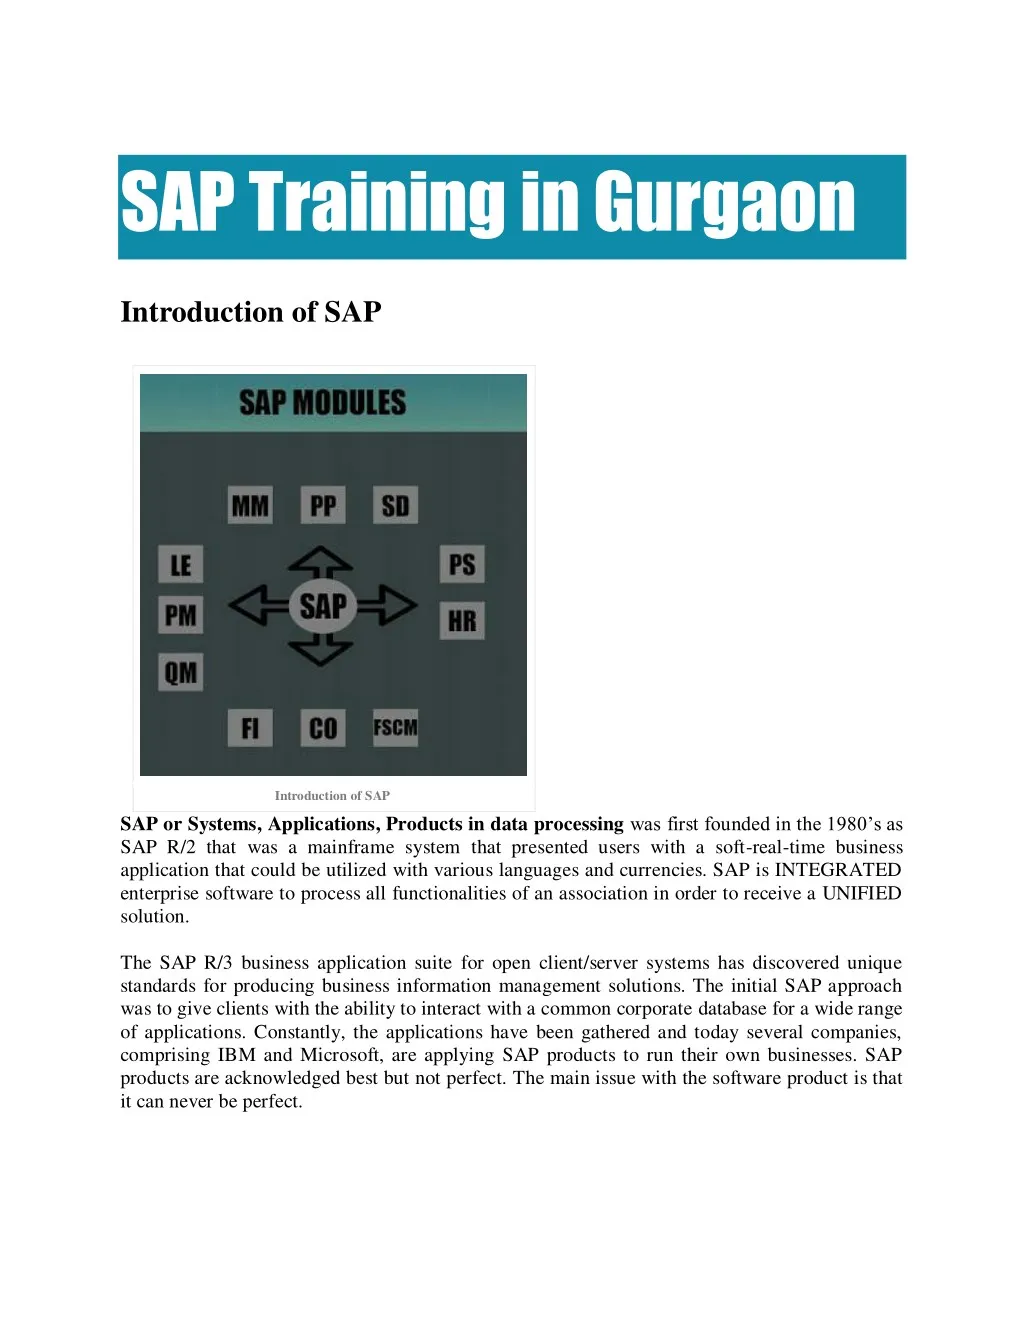 sap training in gurgaon introduction of sap